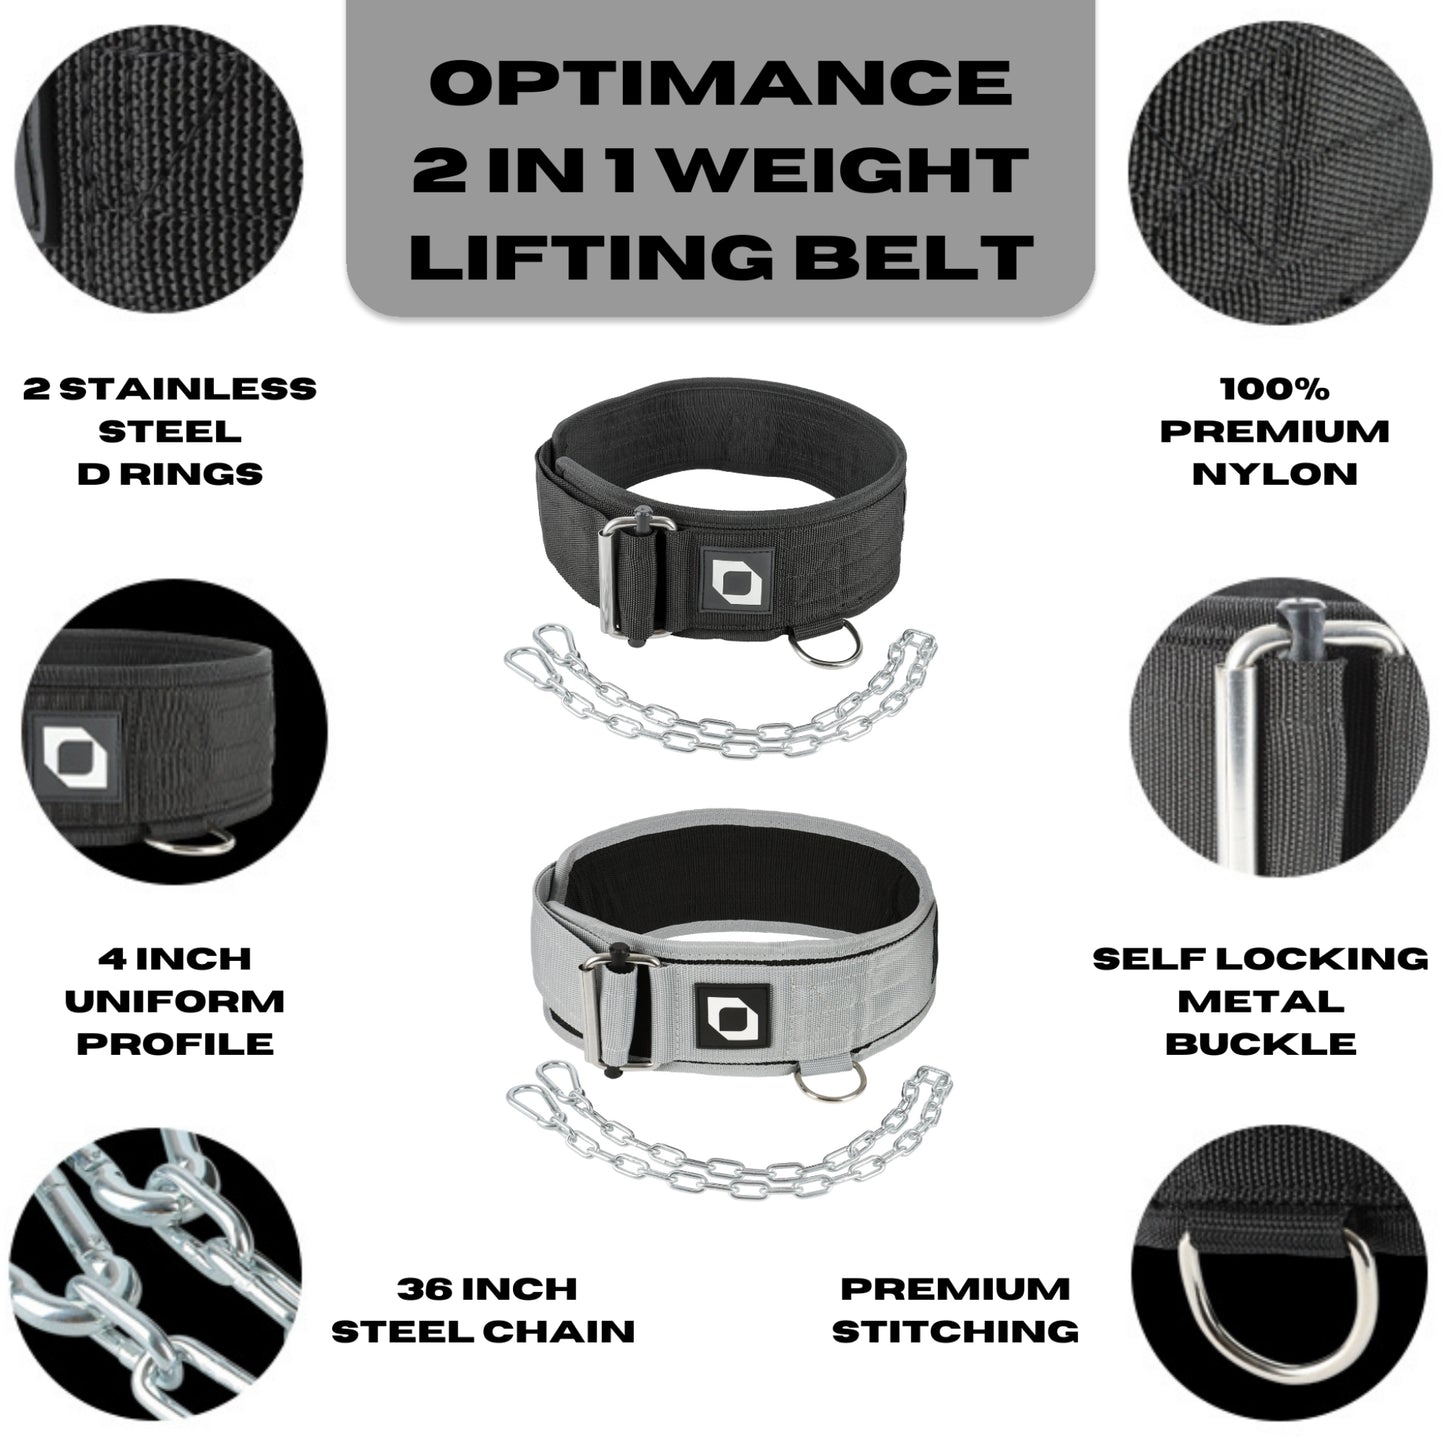 OPTIMANCE 2-in-1 Multi-Purpose Weight Lifting Belt